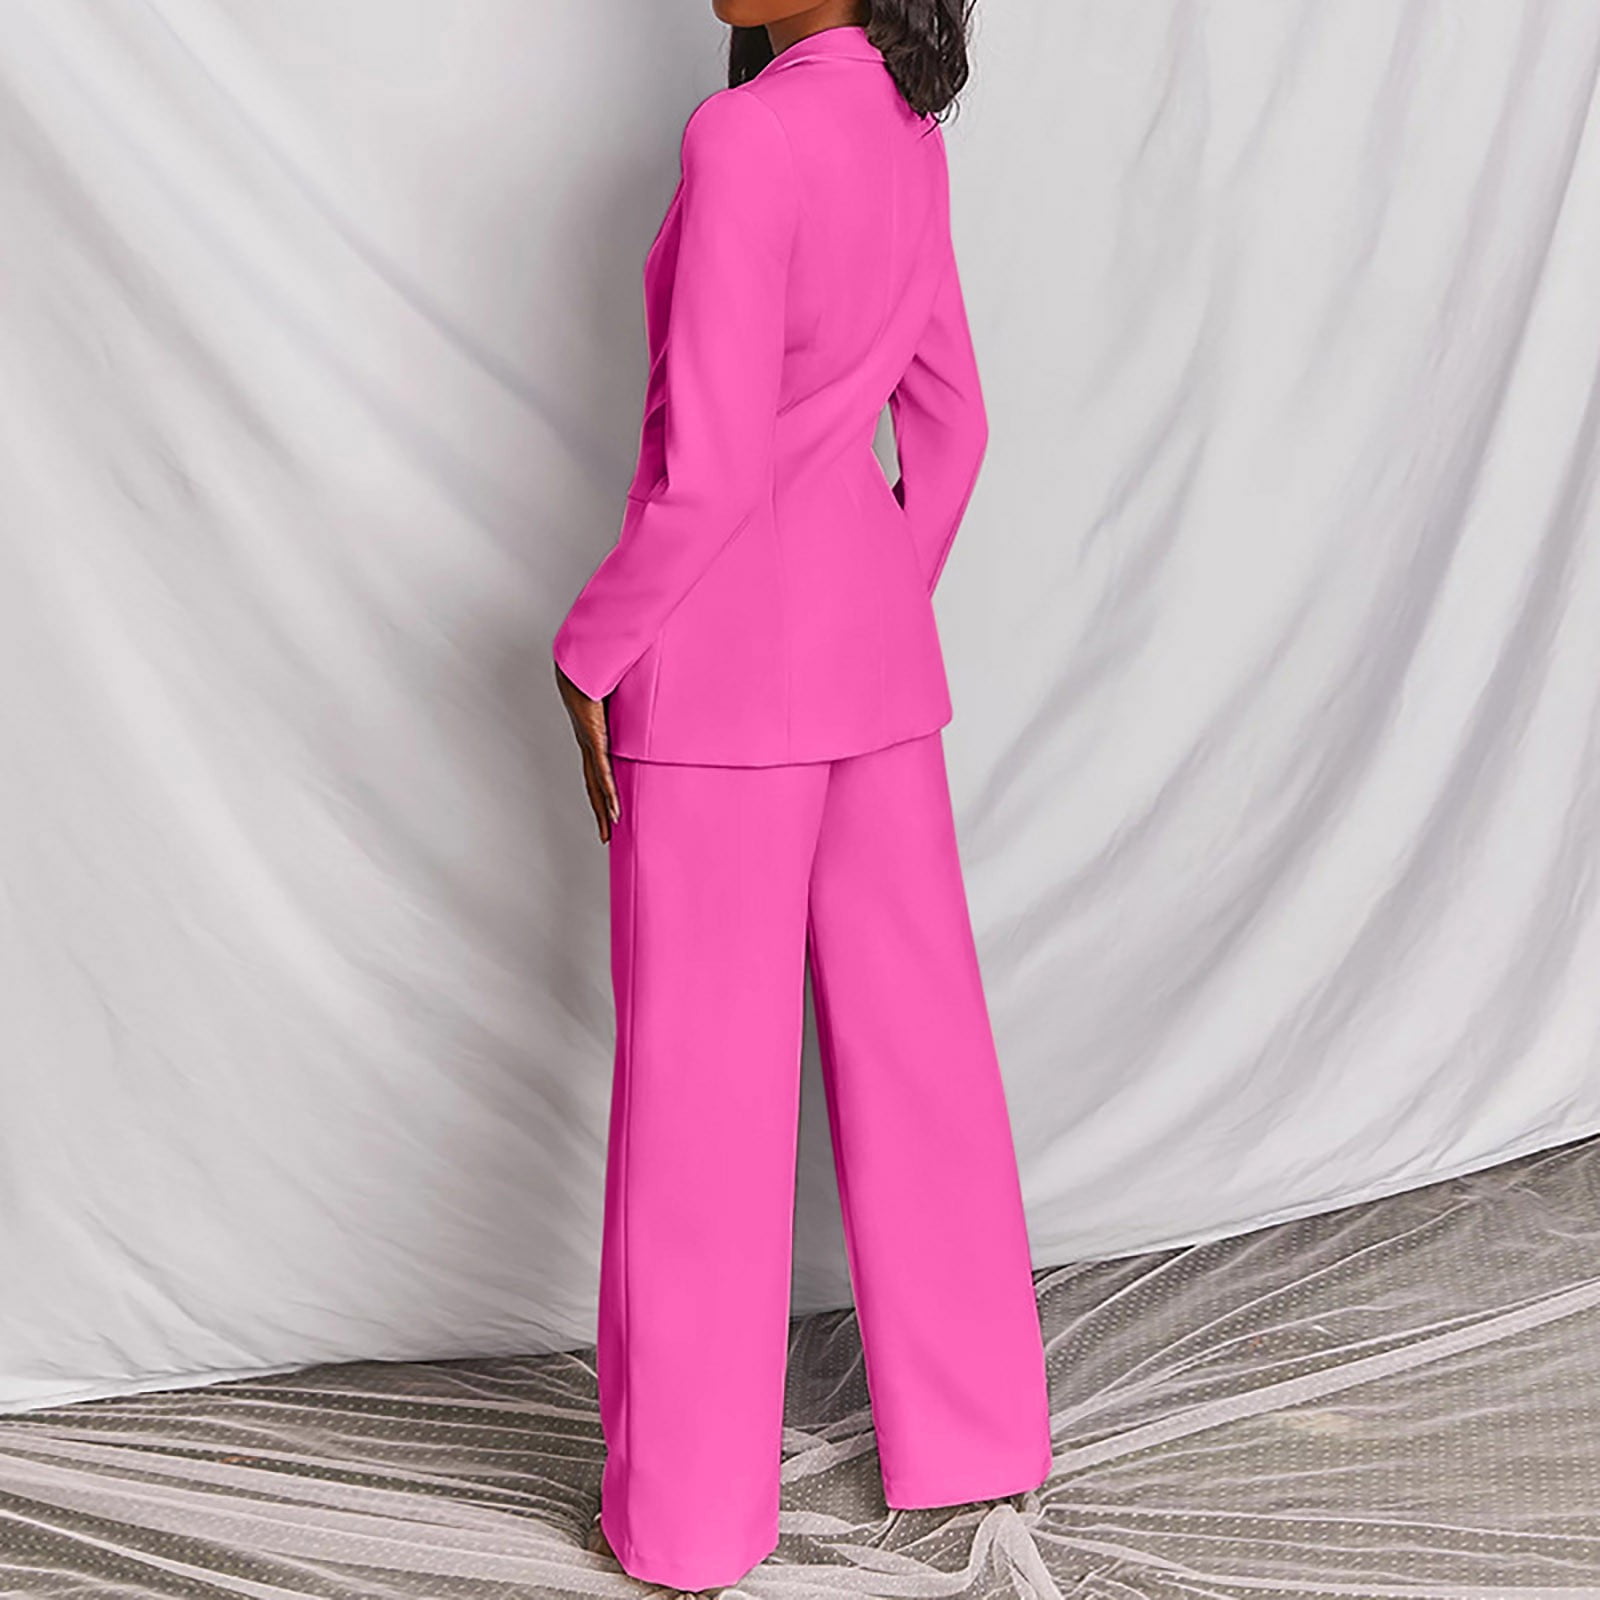 YYDGH Pants Suits for Women Dressy 2 Piece Casual Plus Size Open Front  Blazer Pant Suit Set Wedding Prom Work Business Suit Hot Pink XL 